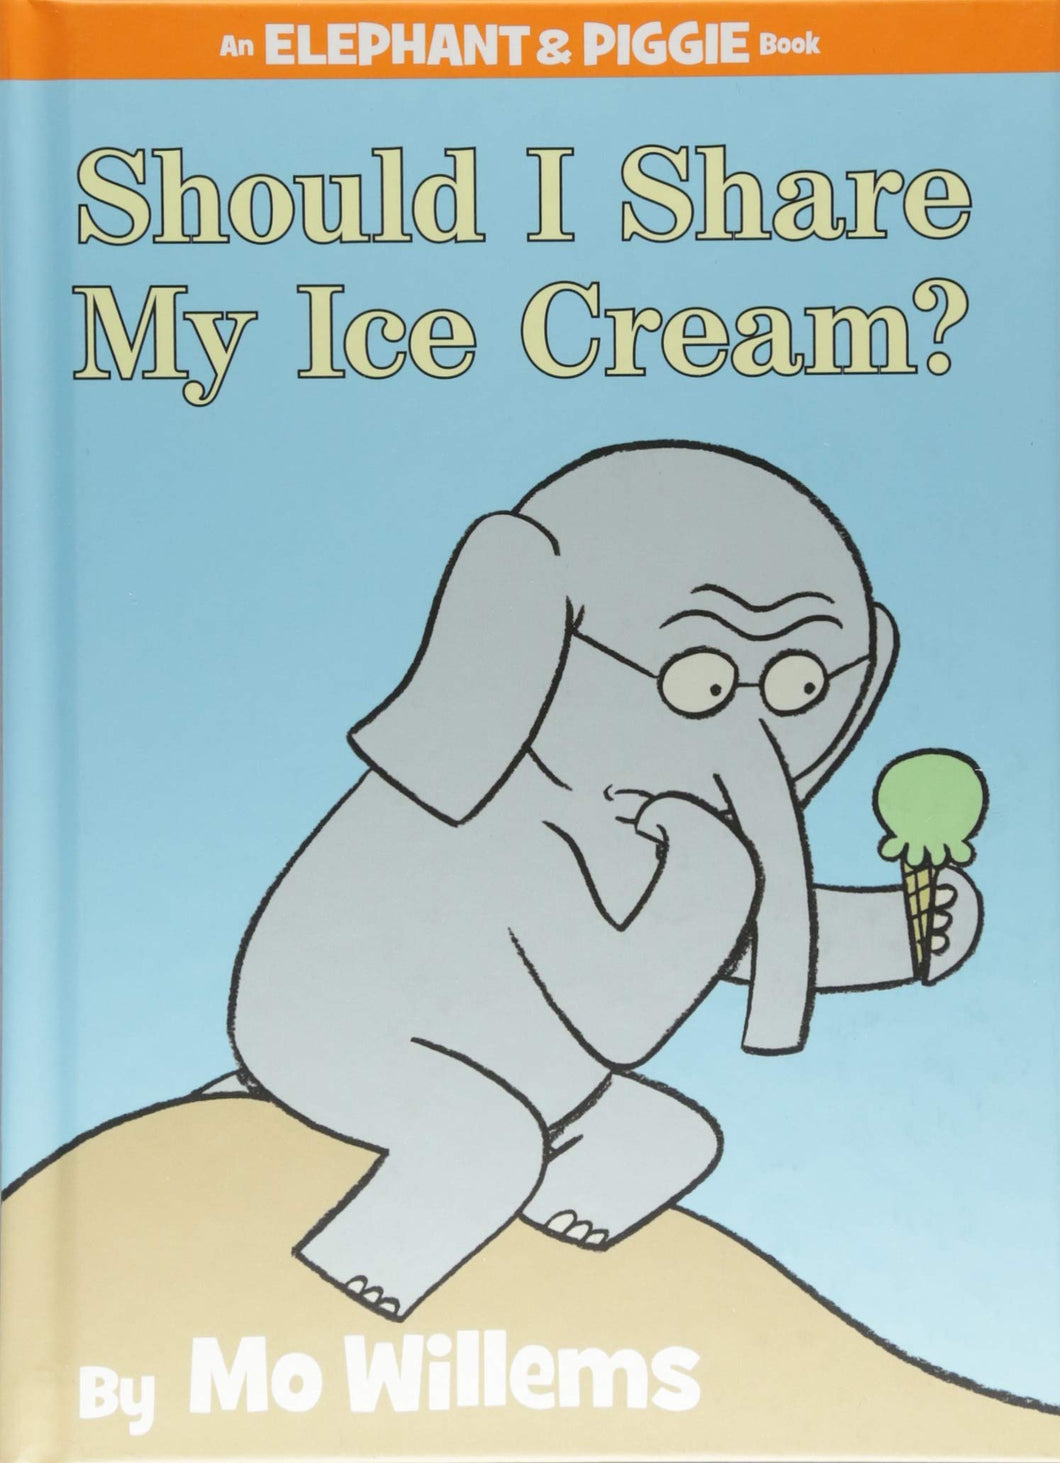 Should I Share My Ice Cream? Success mo willems esikidz marketplace children books preschool books 